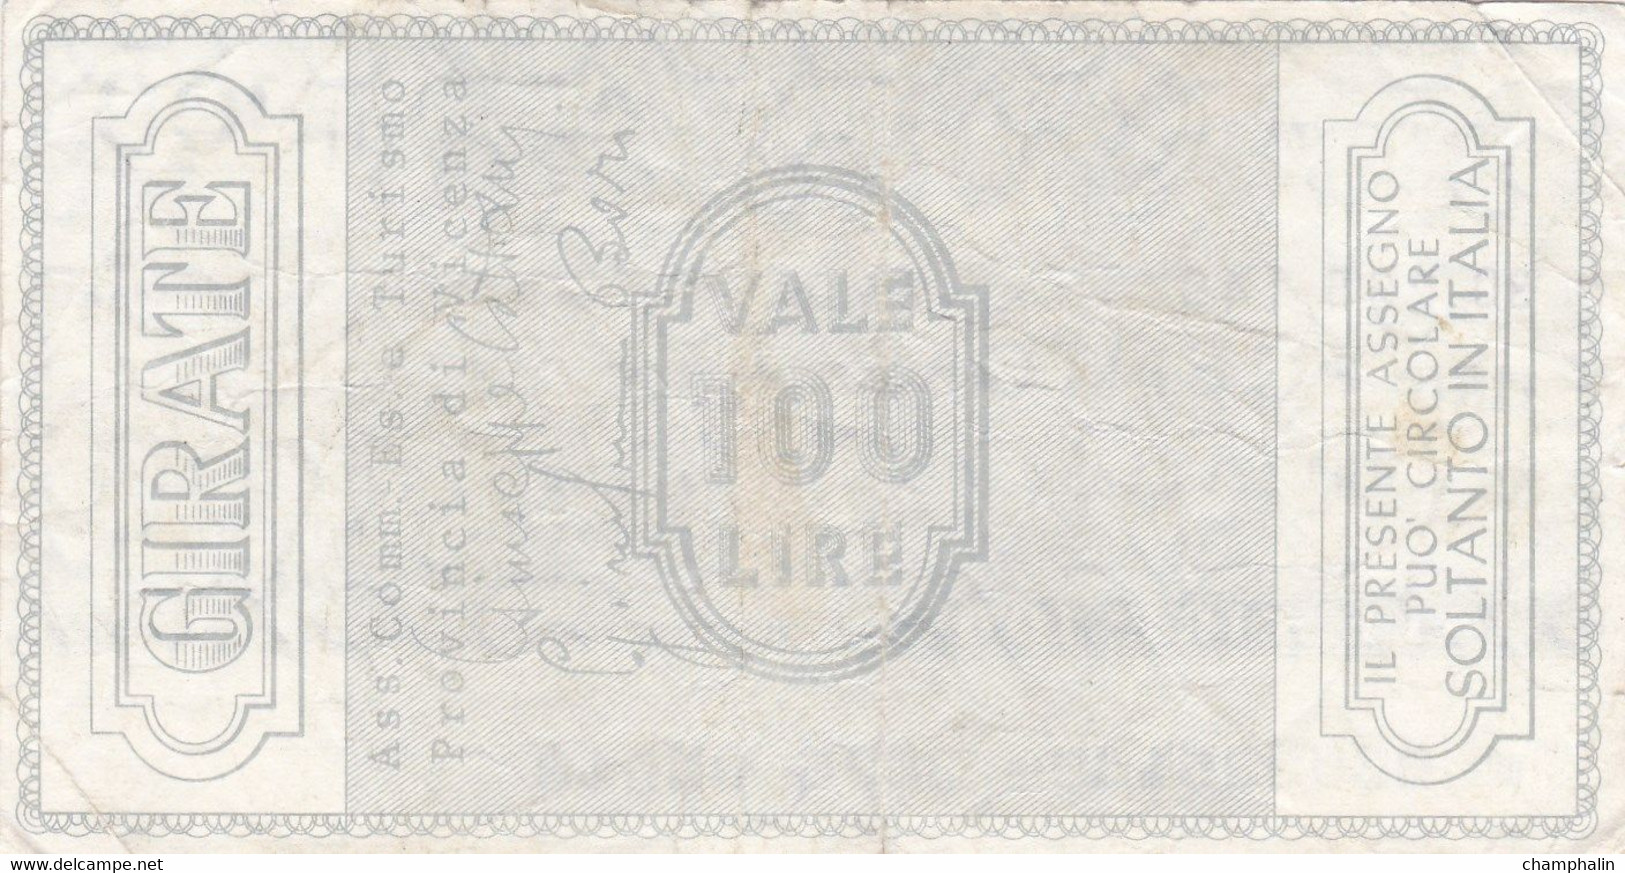 Italie - Billet De 100 Lire - Banco Cattolica Del Veneto - 4 Août 1976 - Emissions Provisionnelles - Chèque - [ 4] Emissioni Provvisorie